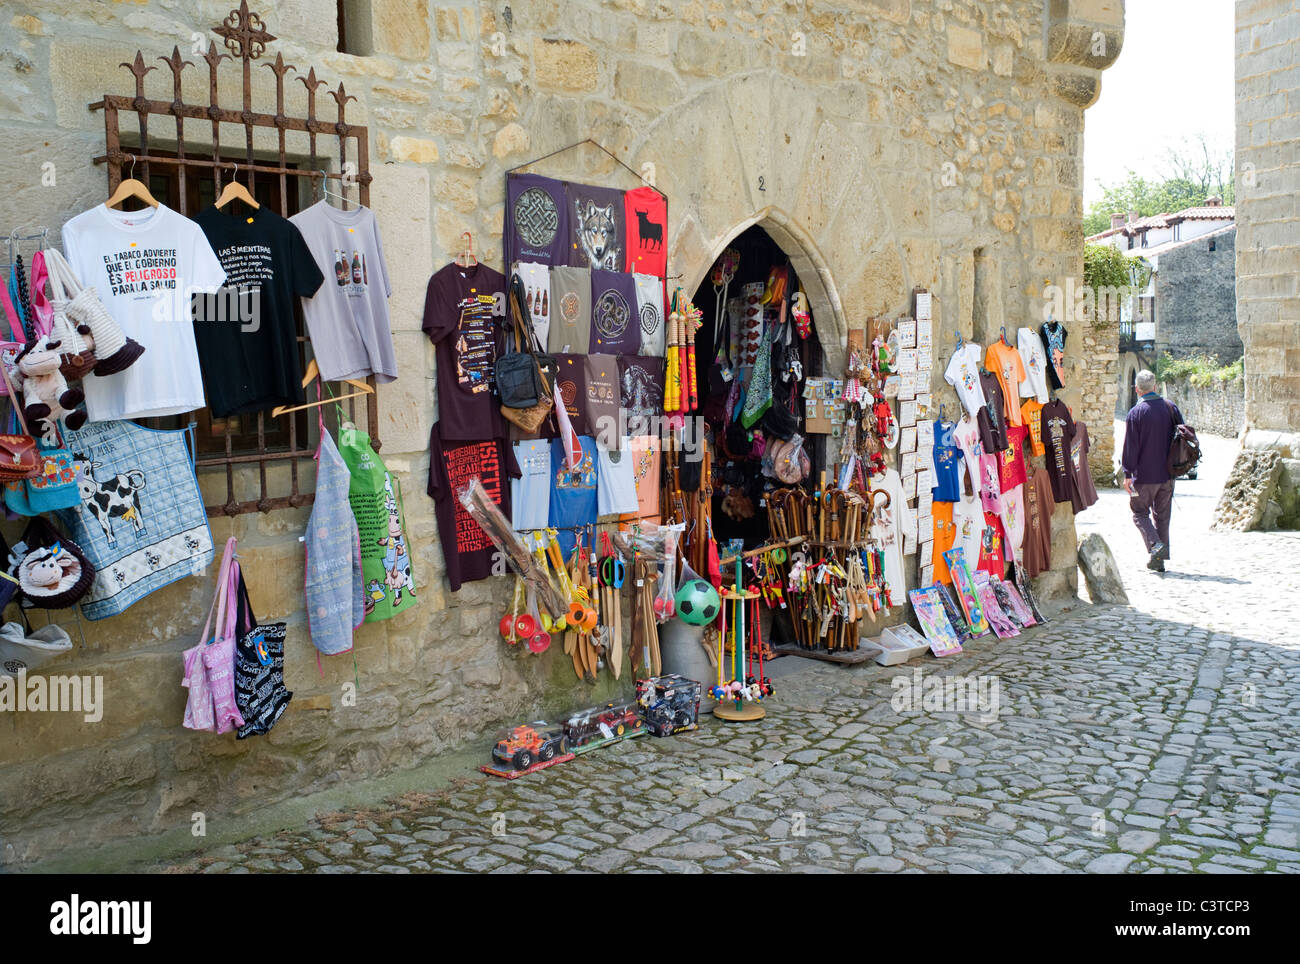 Souvenirs on sale in Santillana del Mar, Cantabria Spain Stock Photo